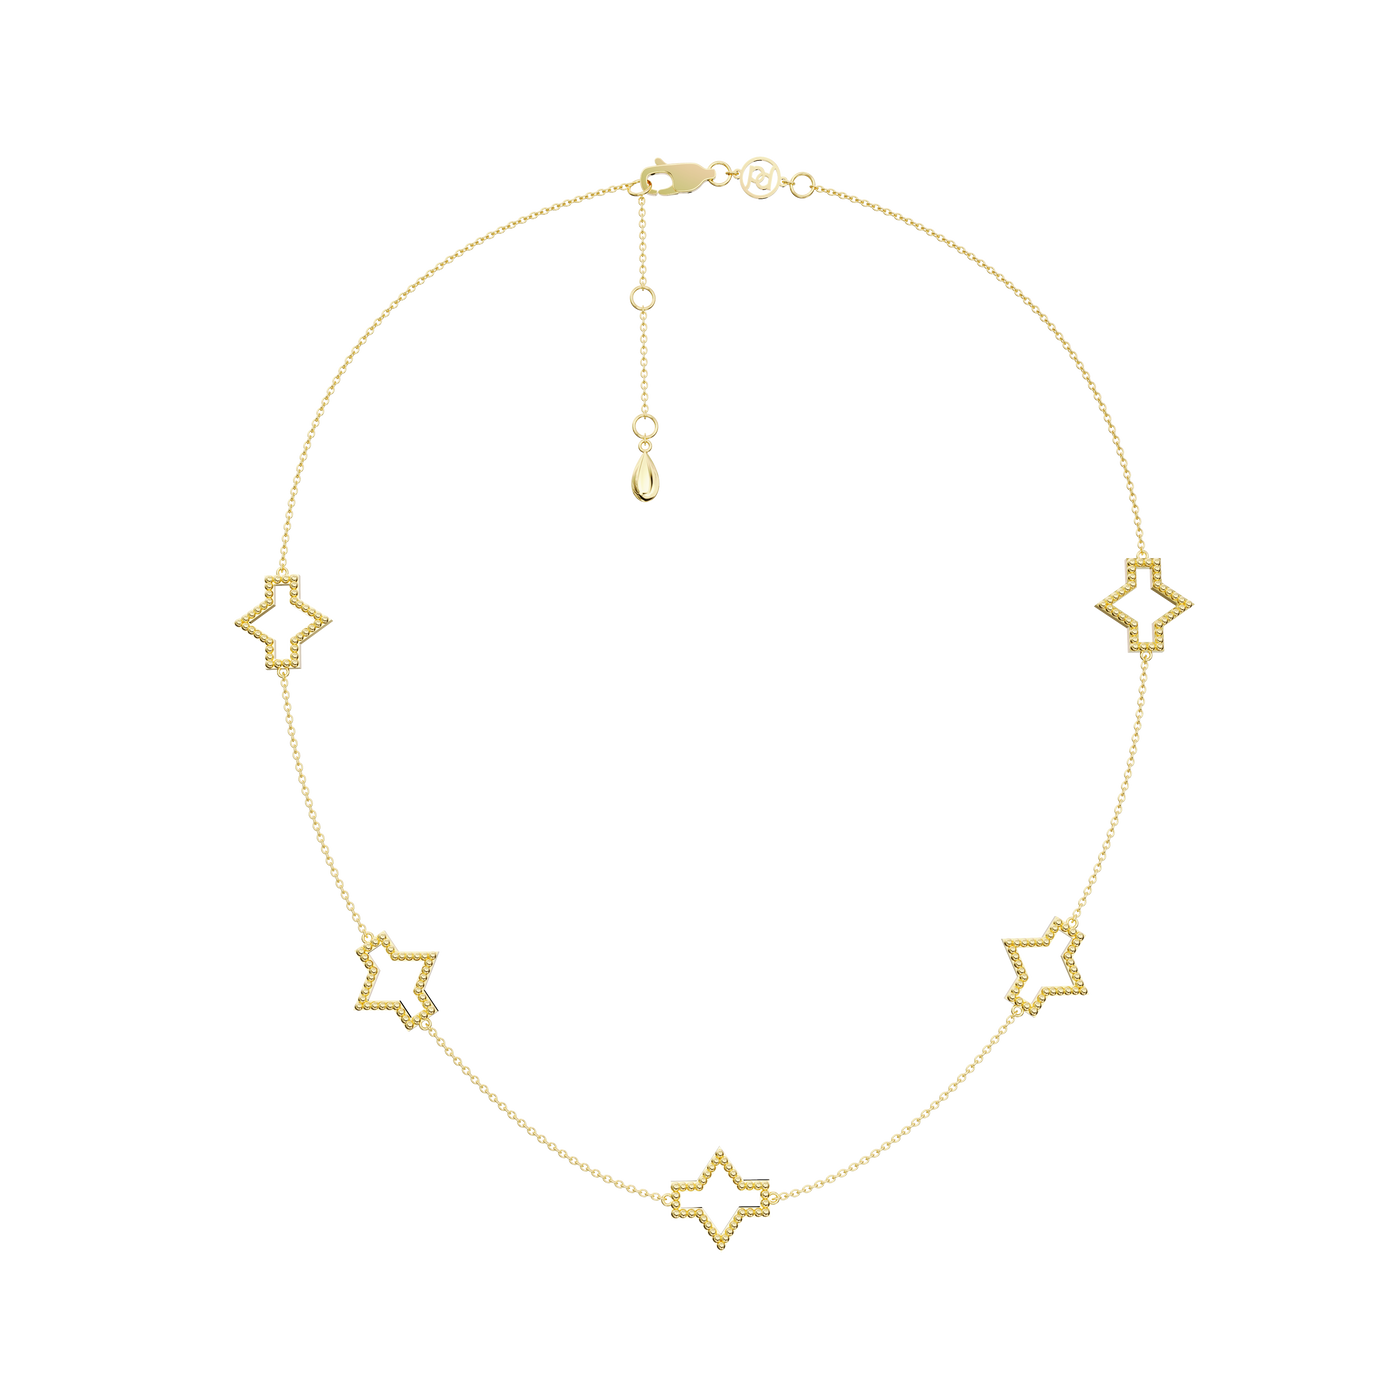 Starlite necklace, 18k gold